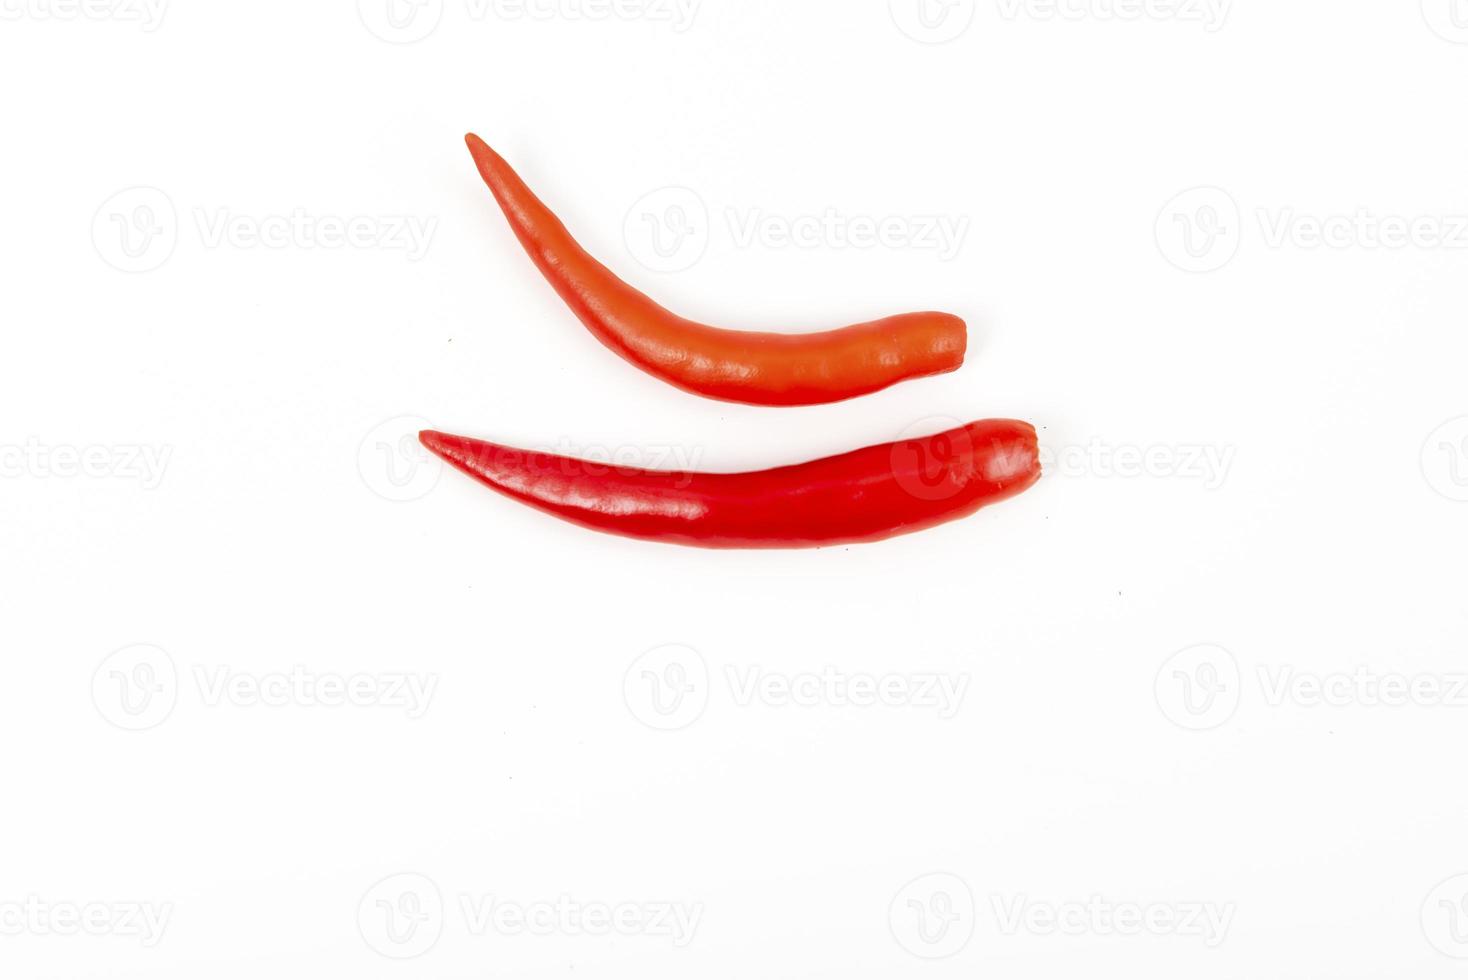 Chili pepper isolated on white background photo